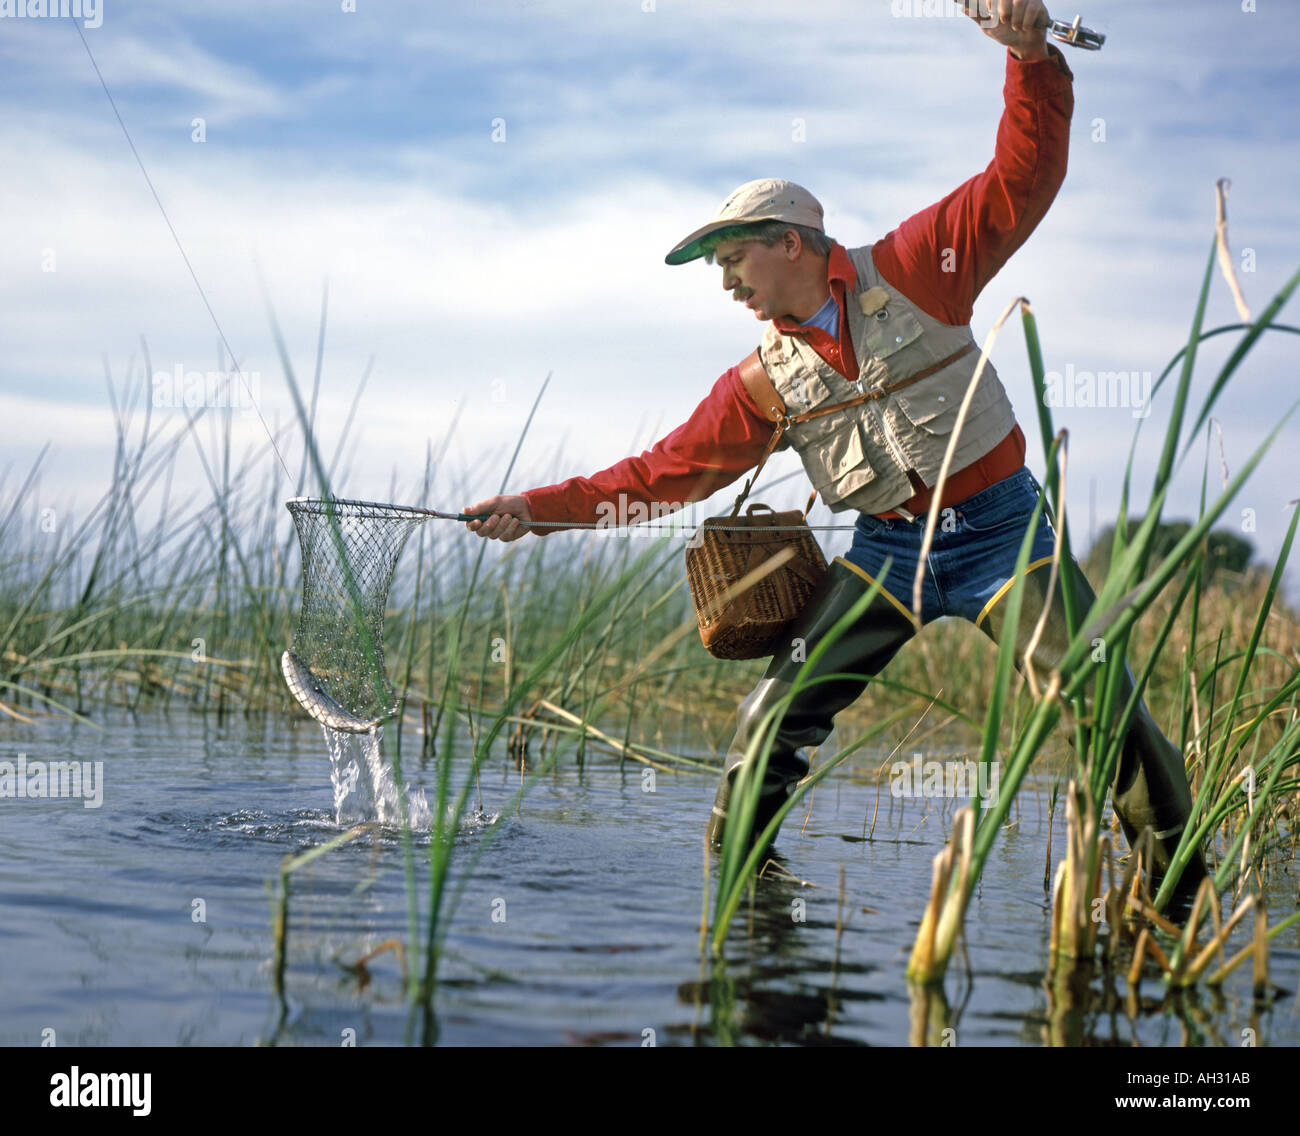 man netting fish on Florida lake Stock Photo